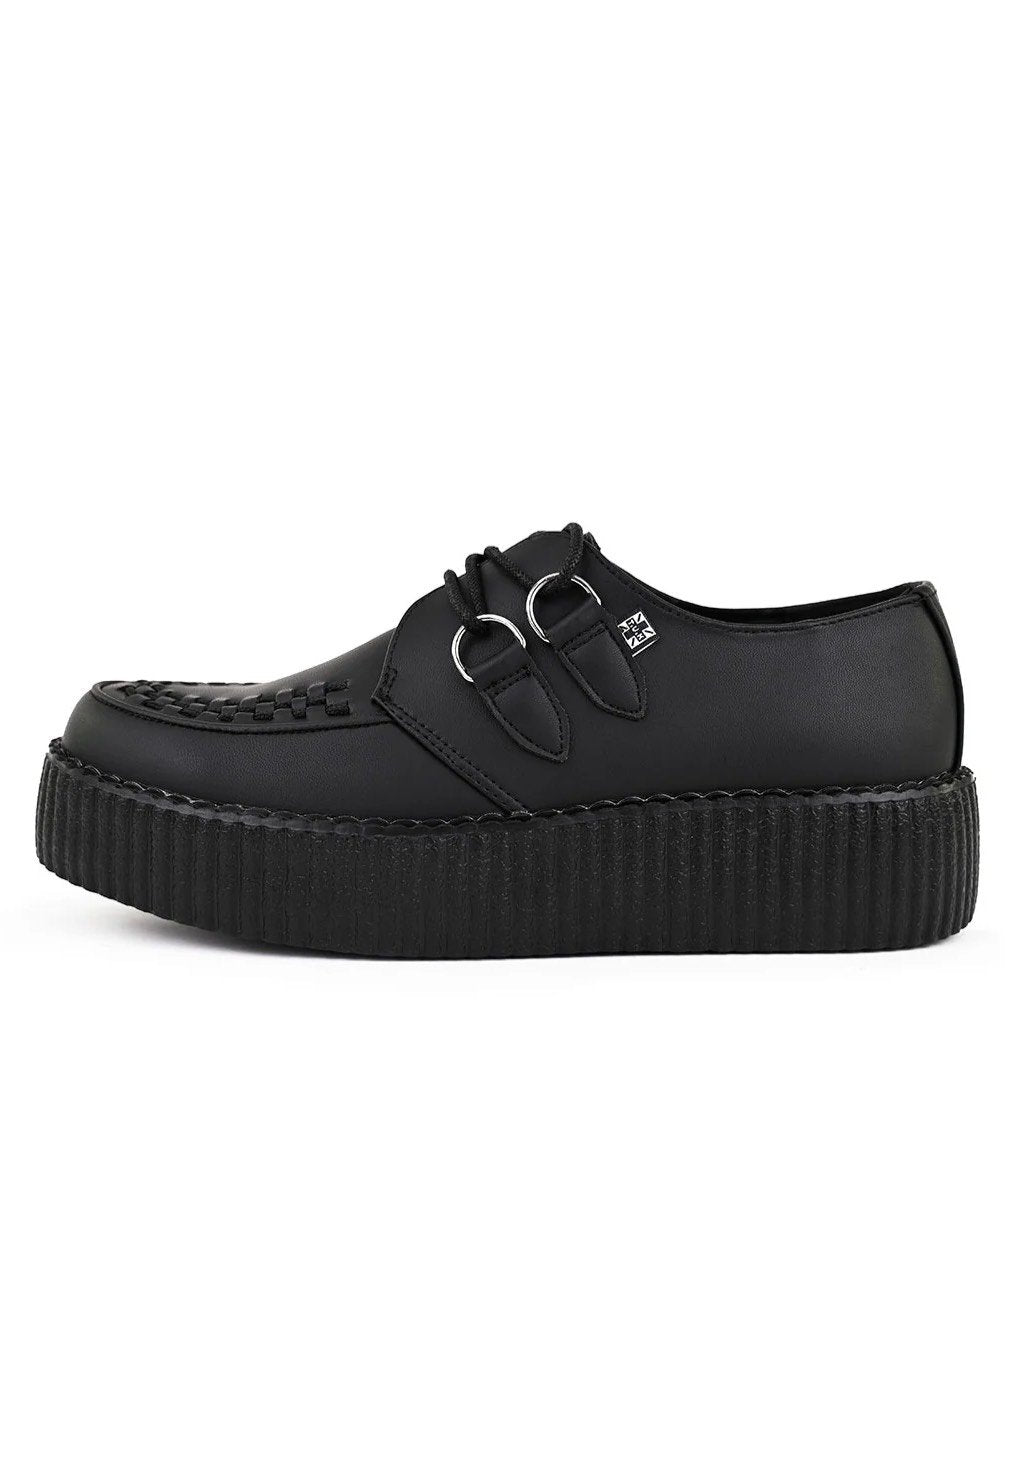 T.U.K. - Viva High Sole Black Vegan - Girl Shoes